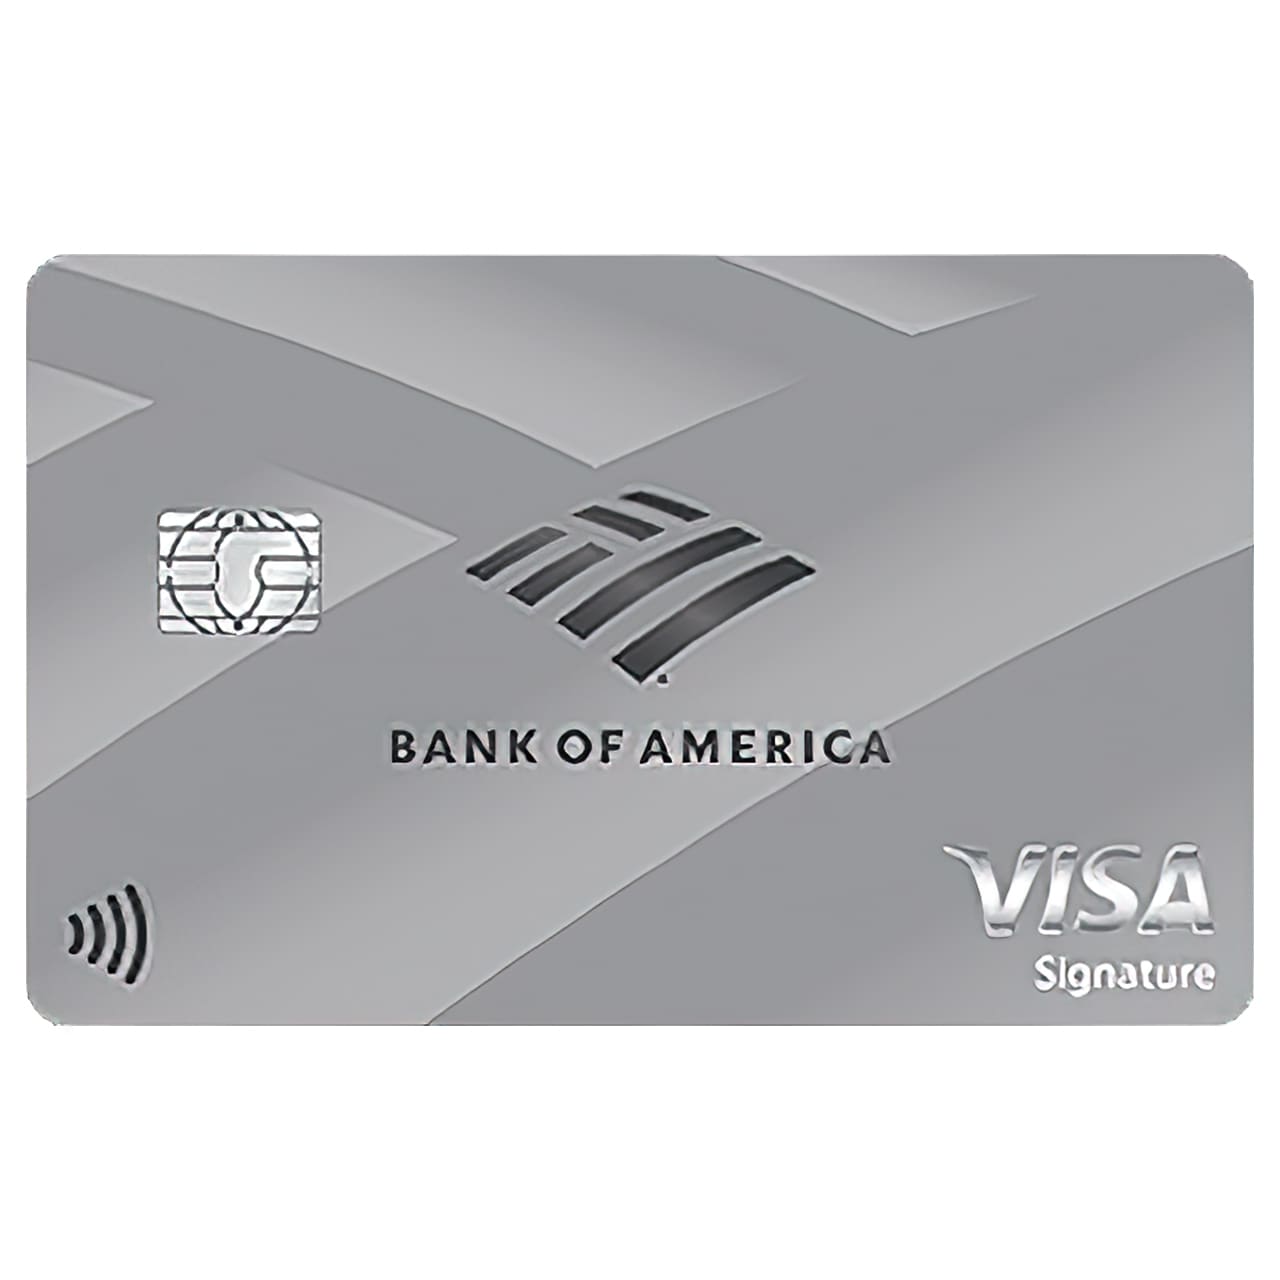 Bank of America Unlimited Cash Rewards